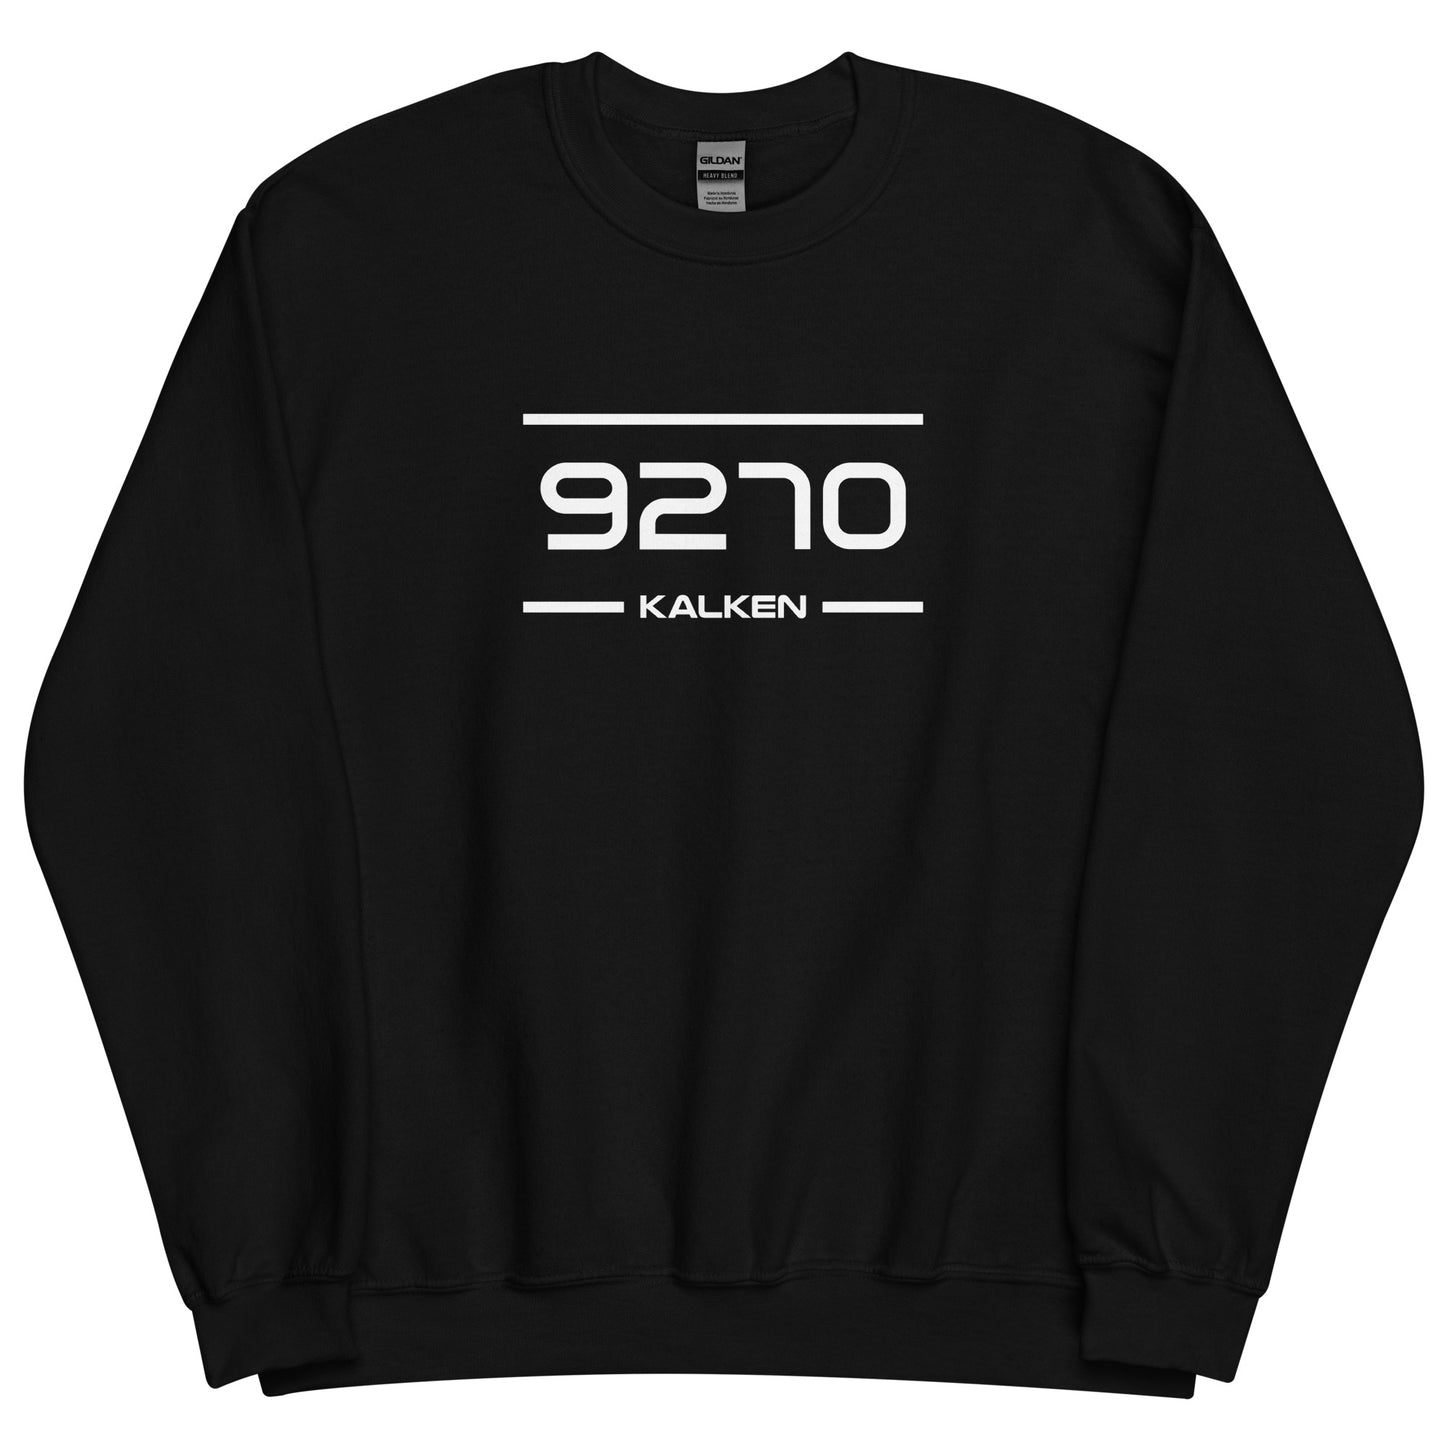 Sweater - 9270 - Kalken (M/V)